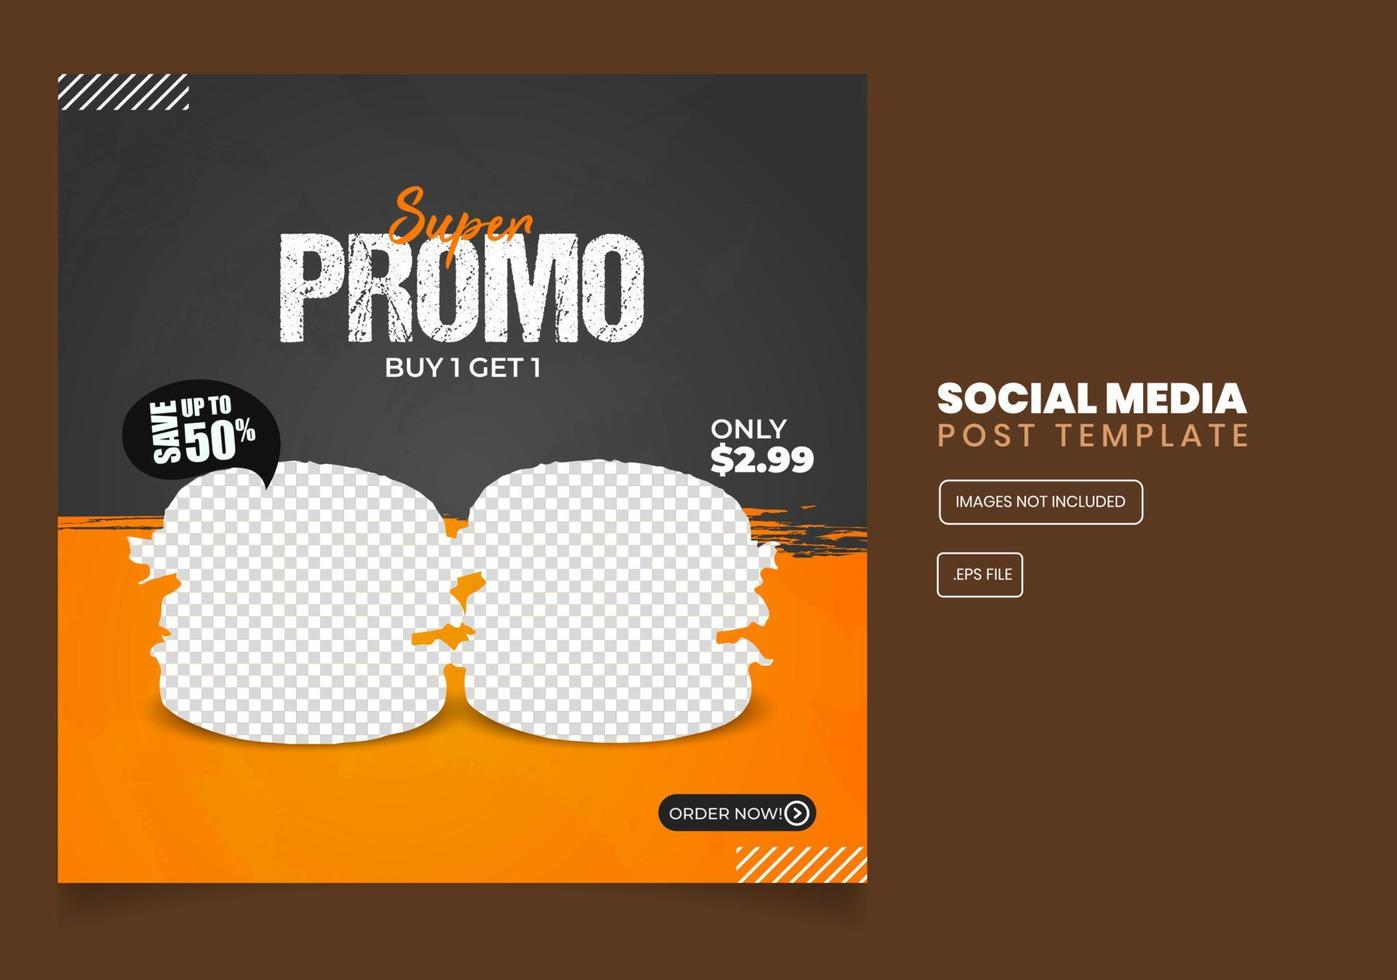 Special delicious burger social media banner post template vector